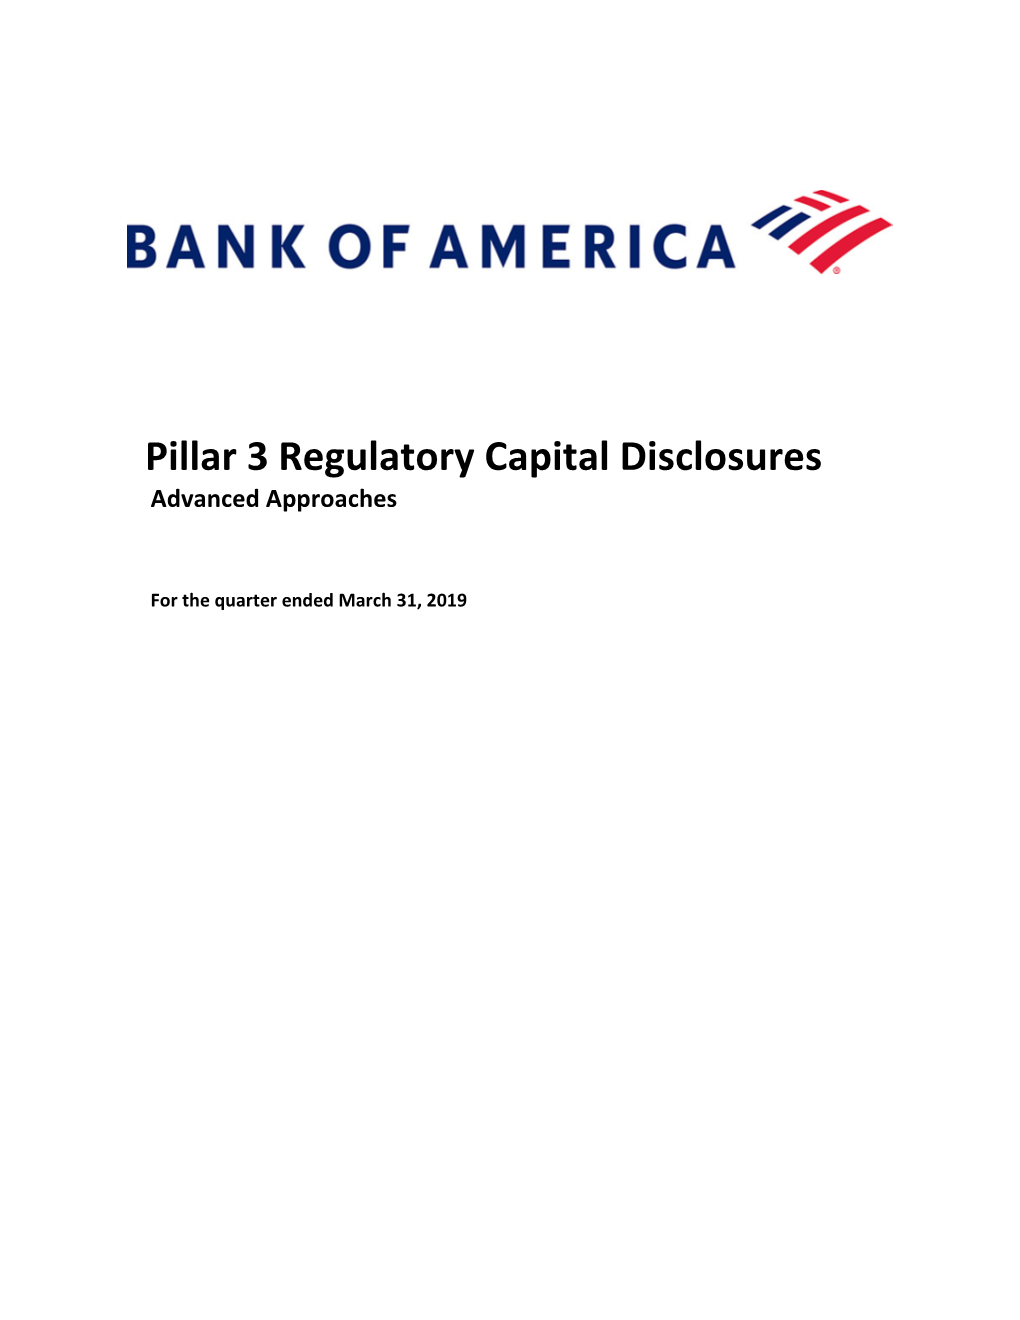 Pillar 3 Regulatory Capital Disclosures Advanced Approaches